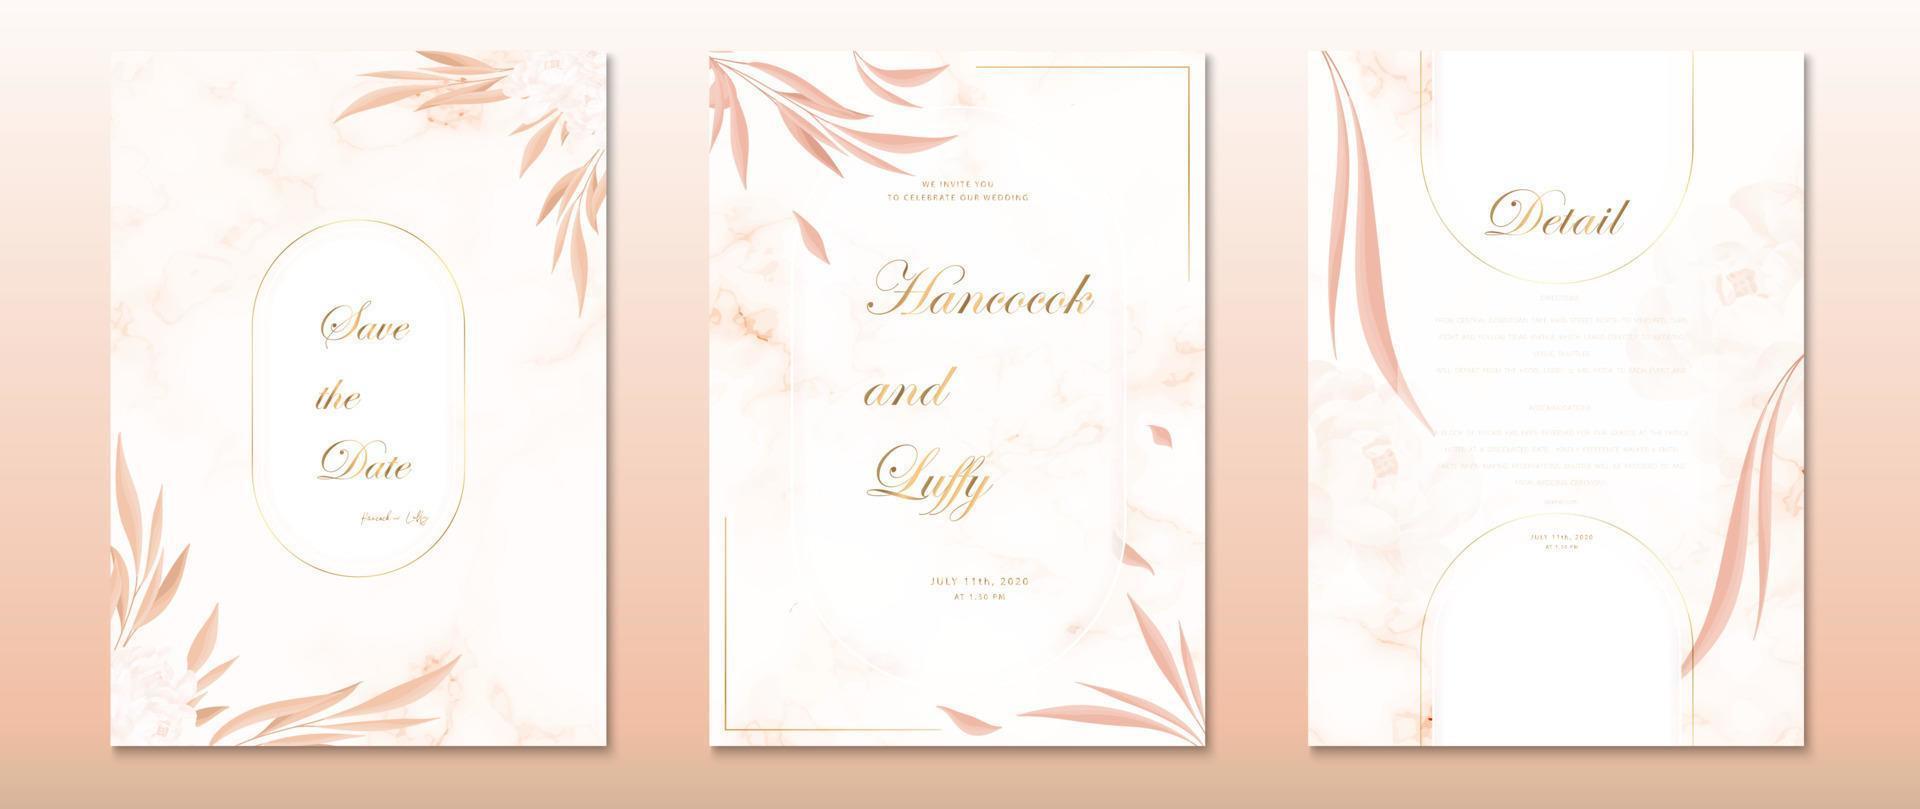 Wedding invitation card template orange background vector